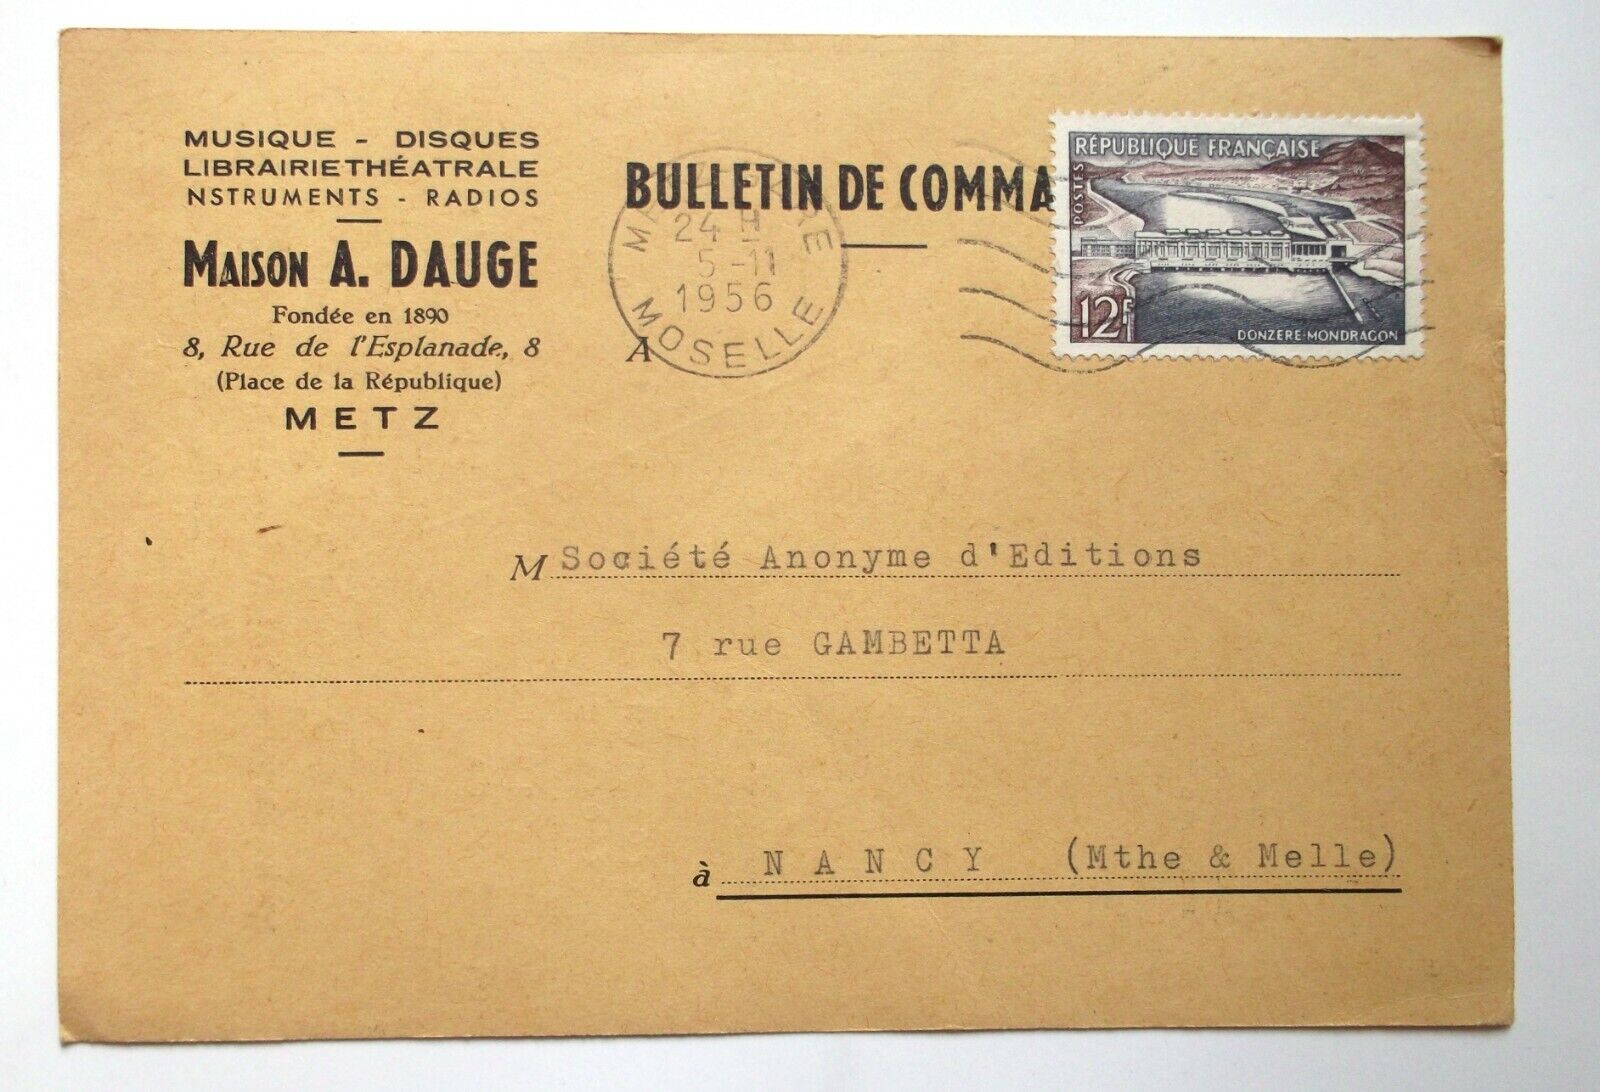 1956 Maison A Dauge Music Disc Metz Commercial Correspondence Postcard